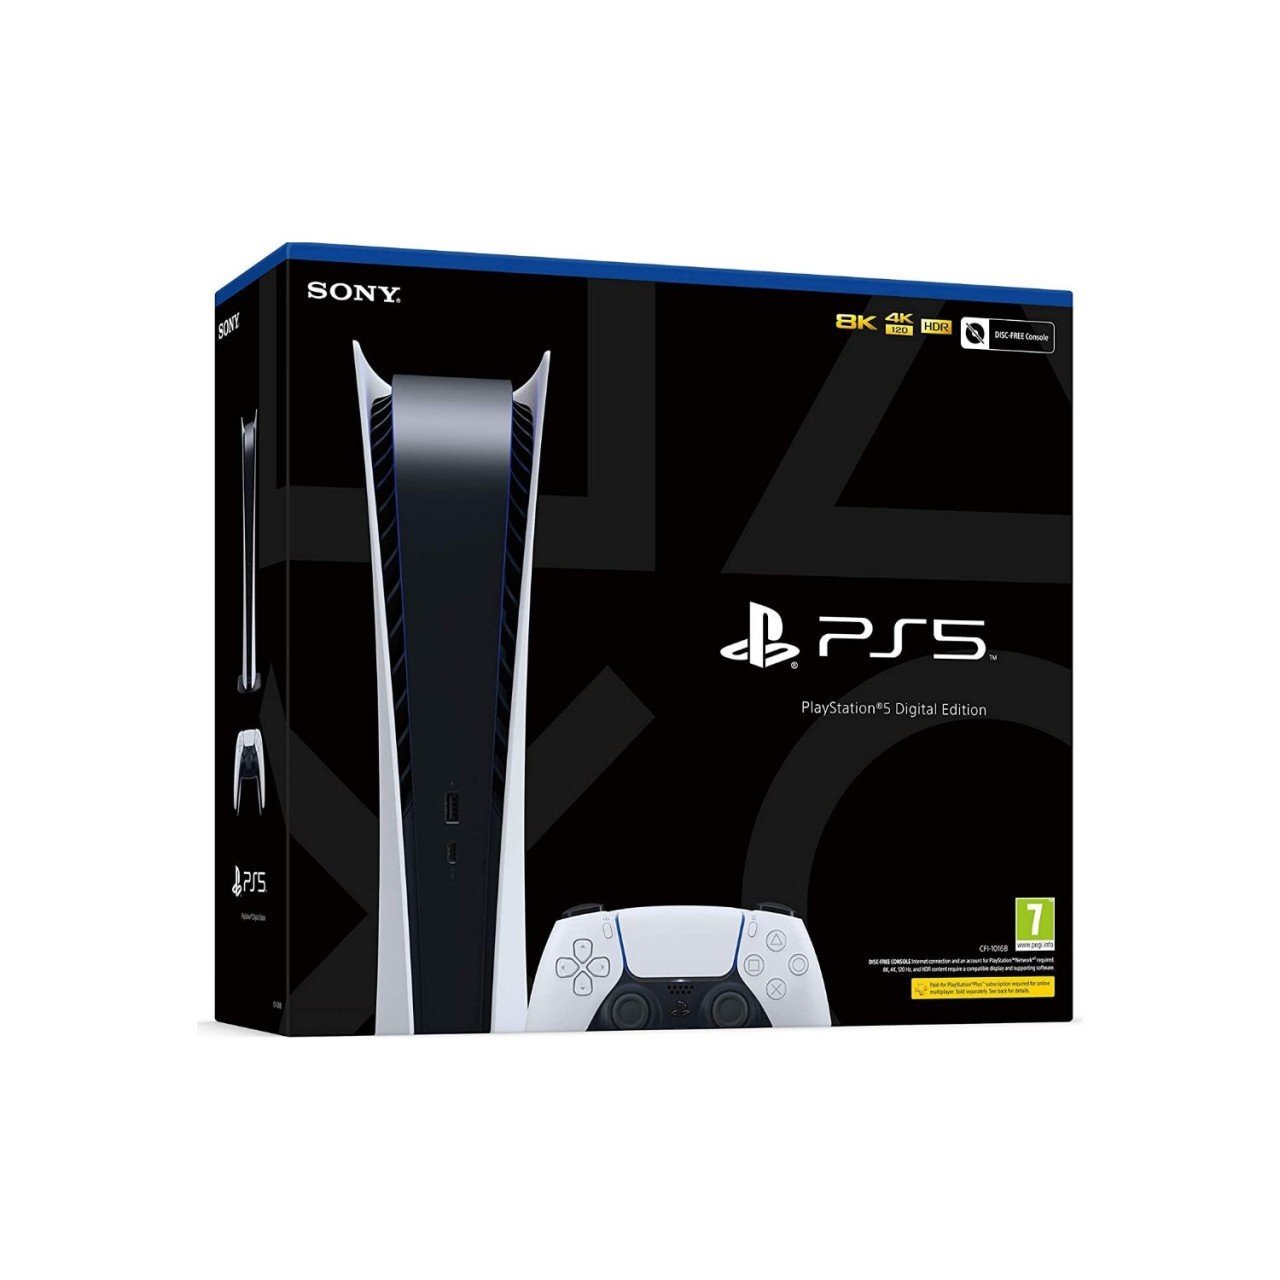 Sony Playstation 5 PS5 Digital Sürüm Oyun Konsolu